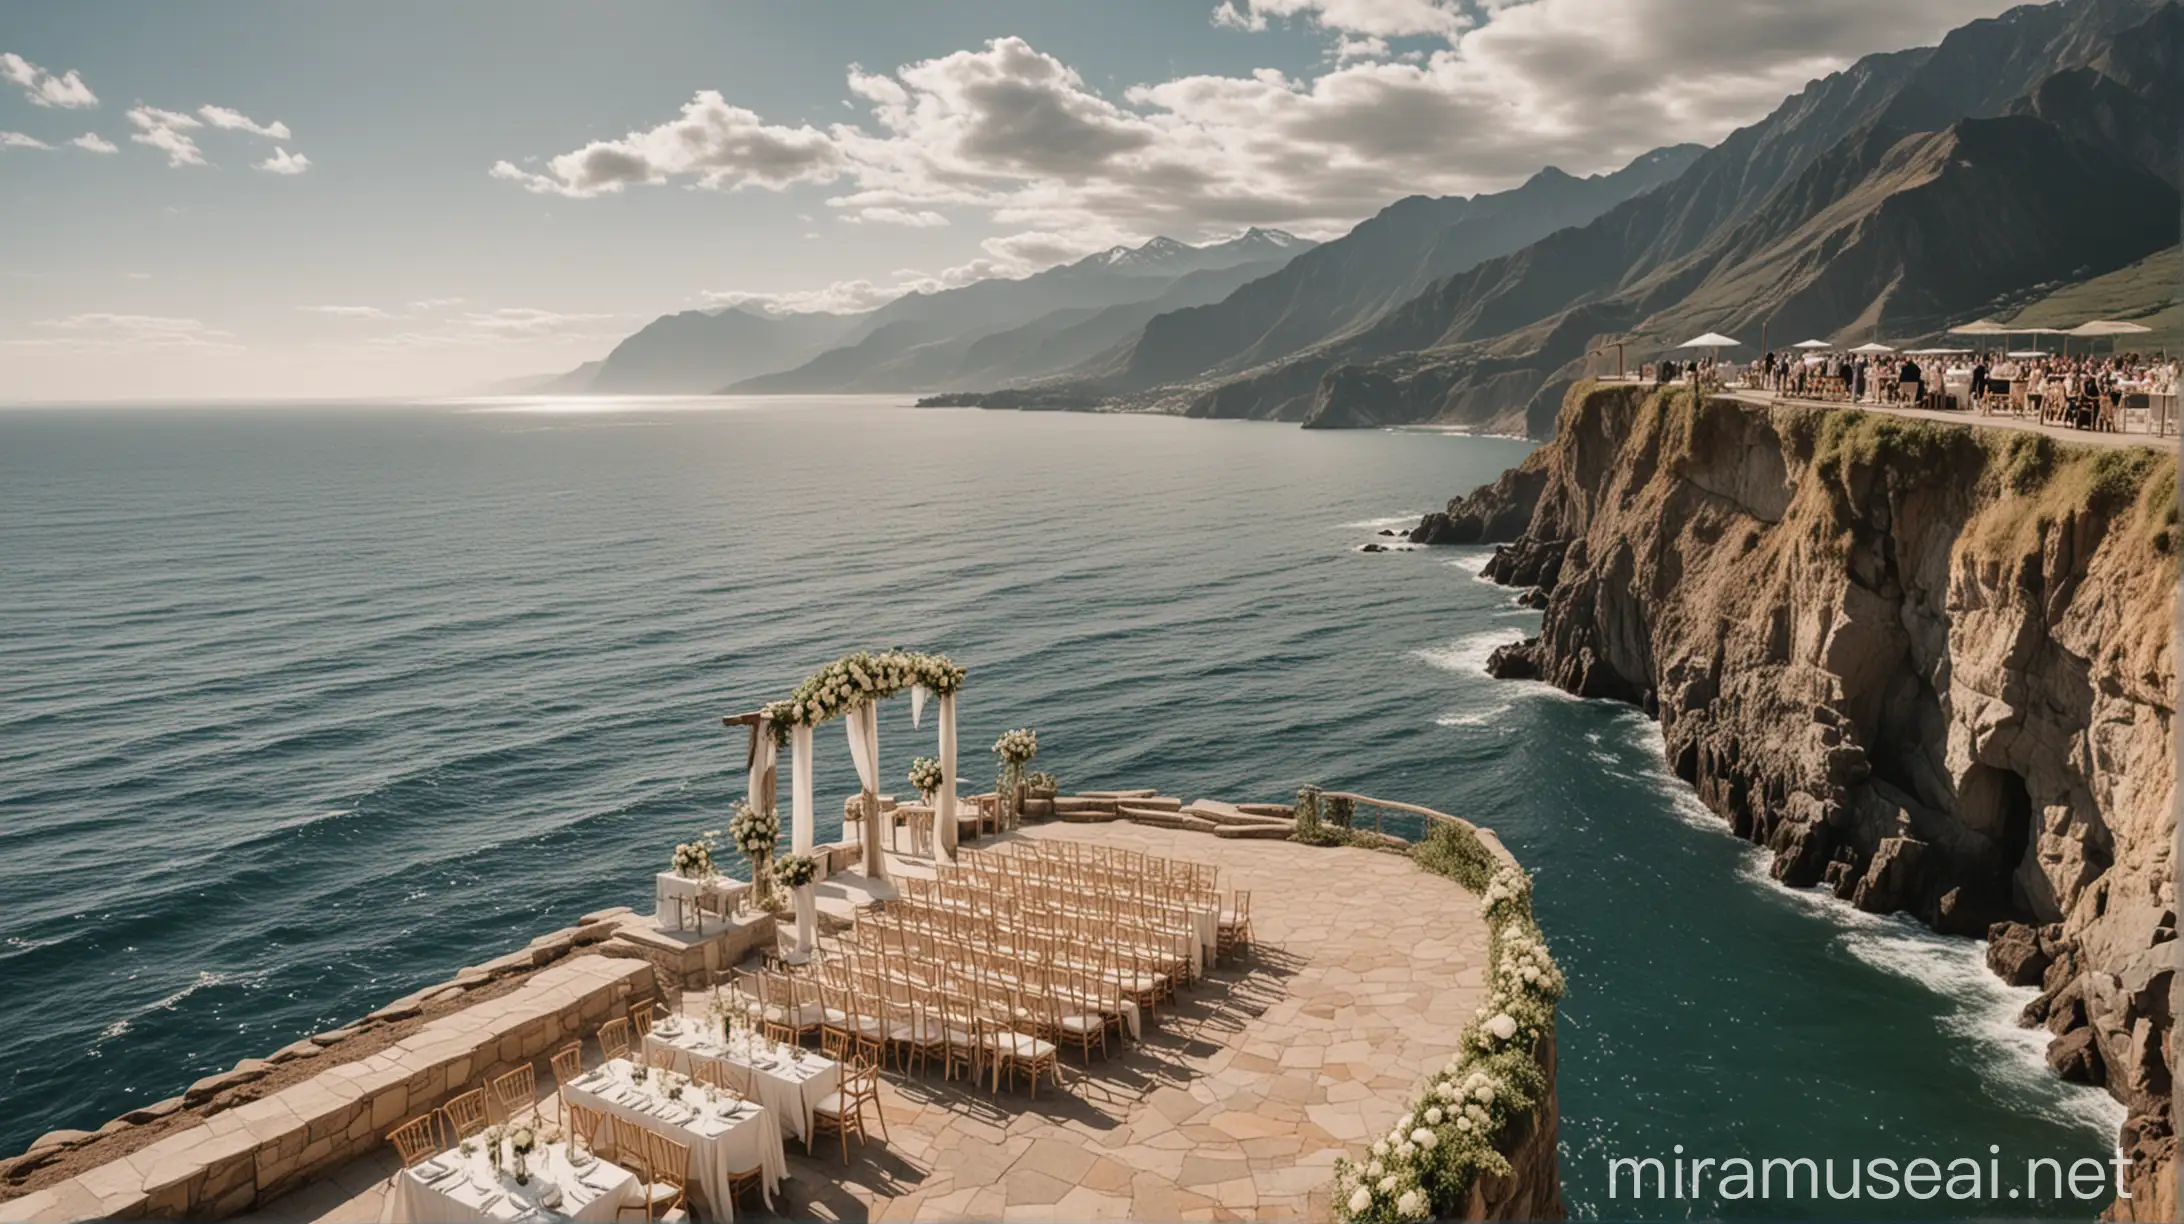 Scenic Ocean Cliff Wedding Venue with Mountain Backdrop